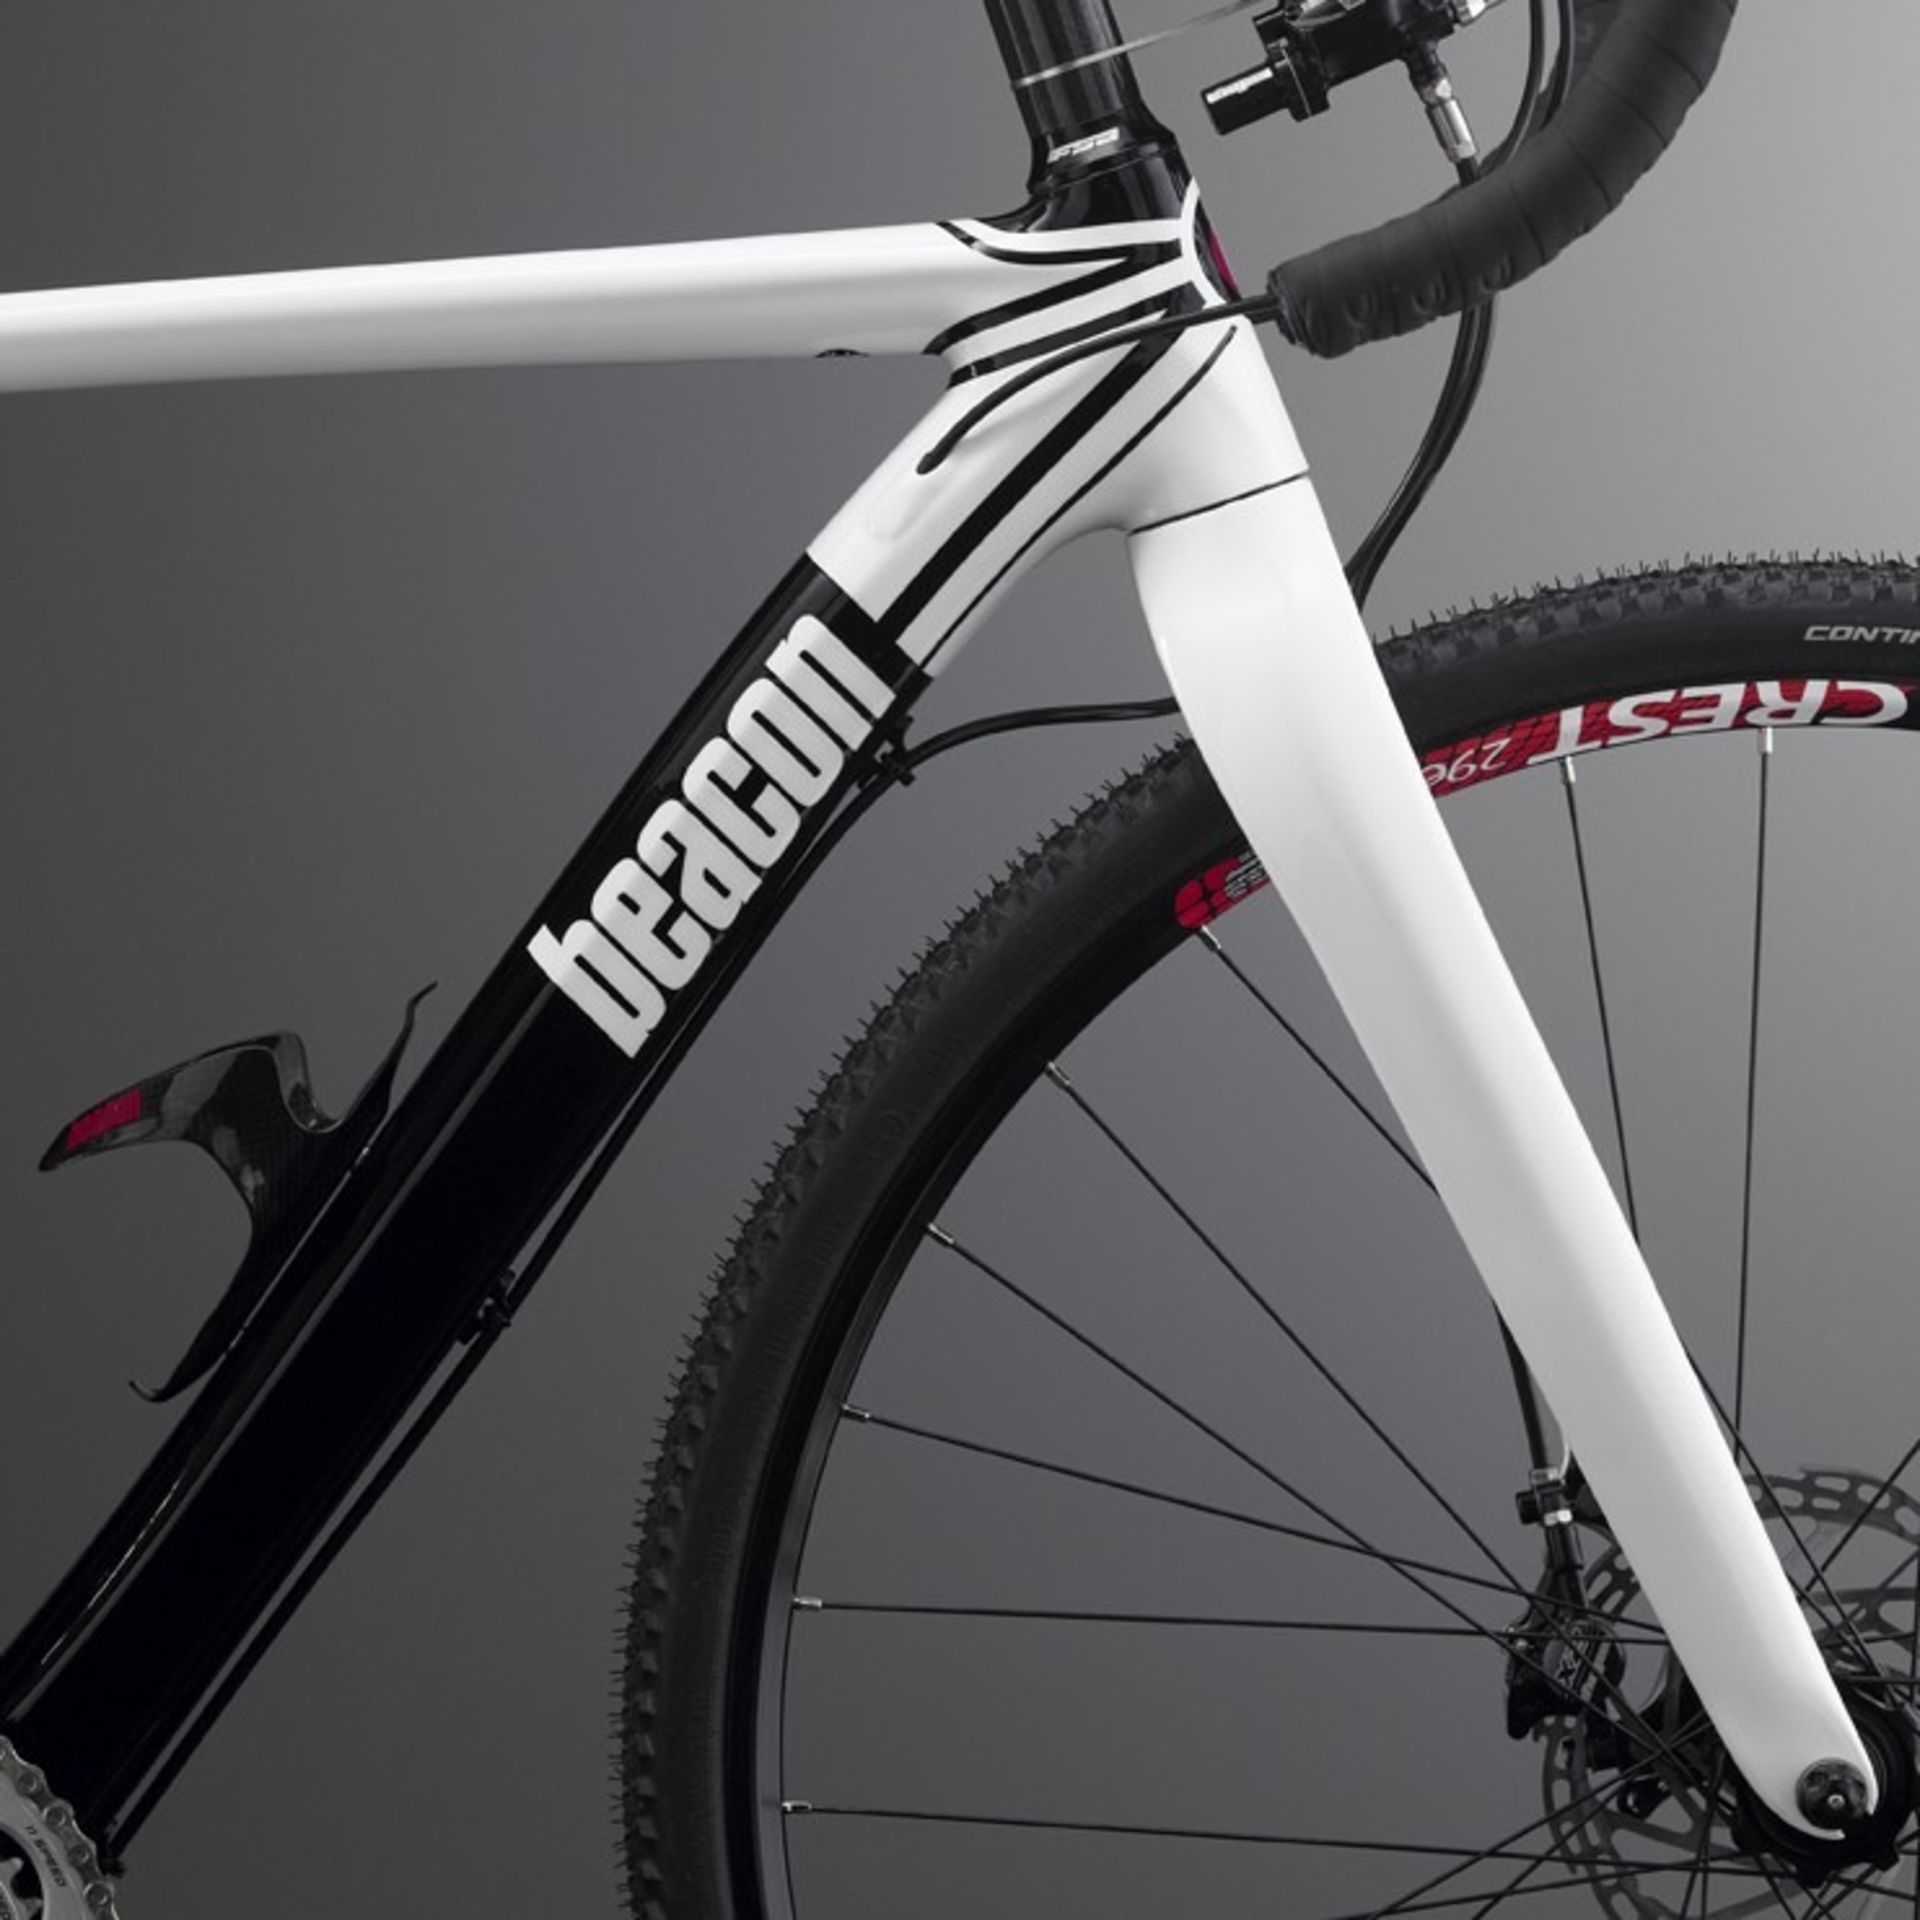 1 x Beacon Model BF-45, Size 580, Carbon Fibre Bike Frame in Black & White. - Image 3 of 3